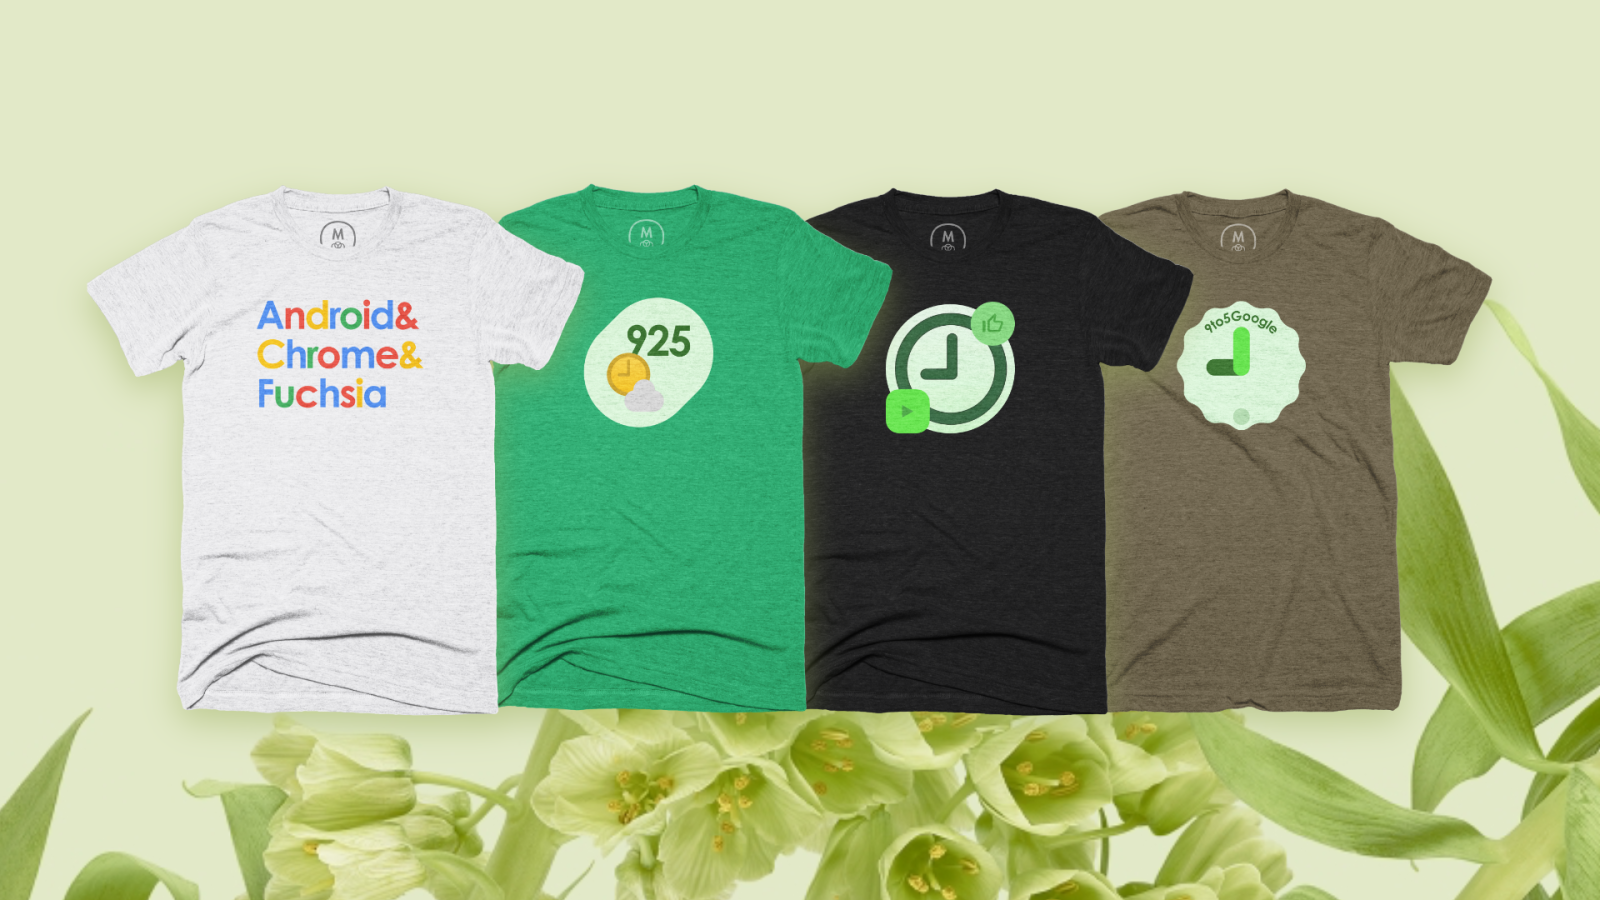 9to5Google shirts